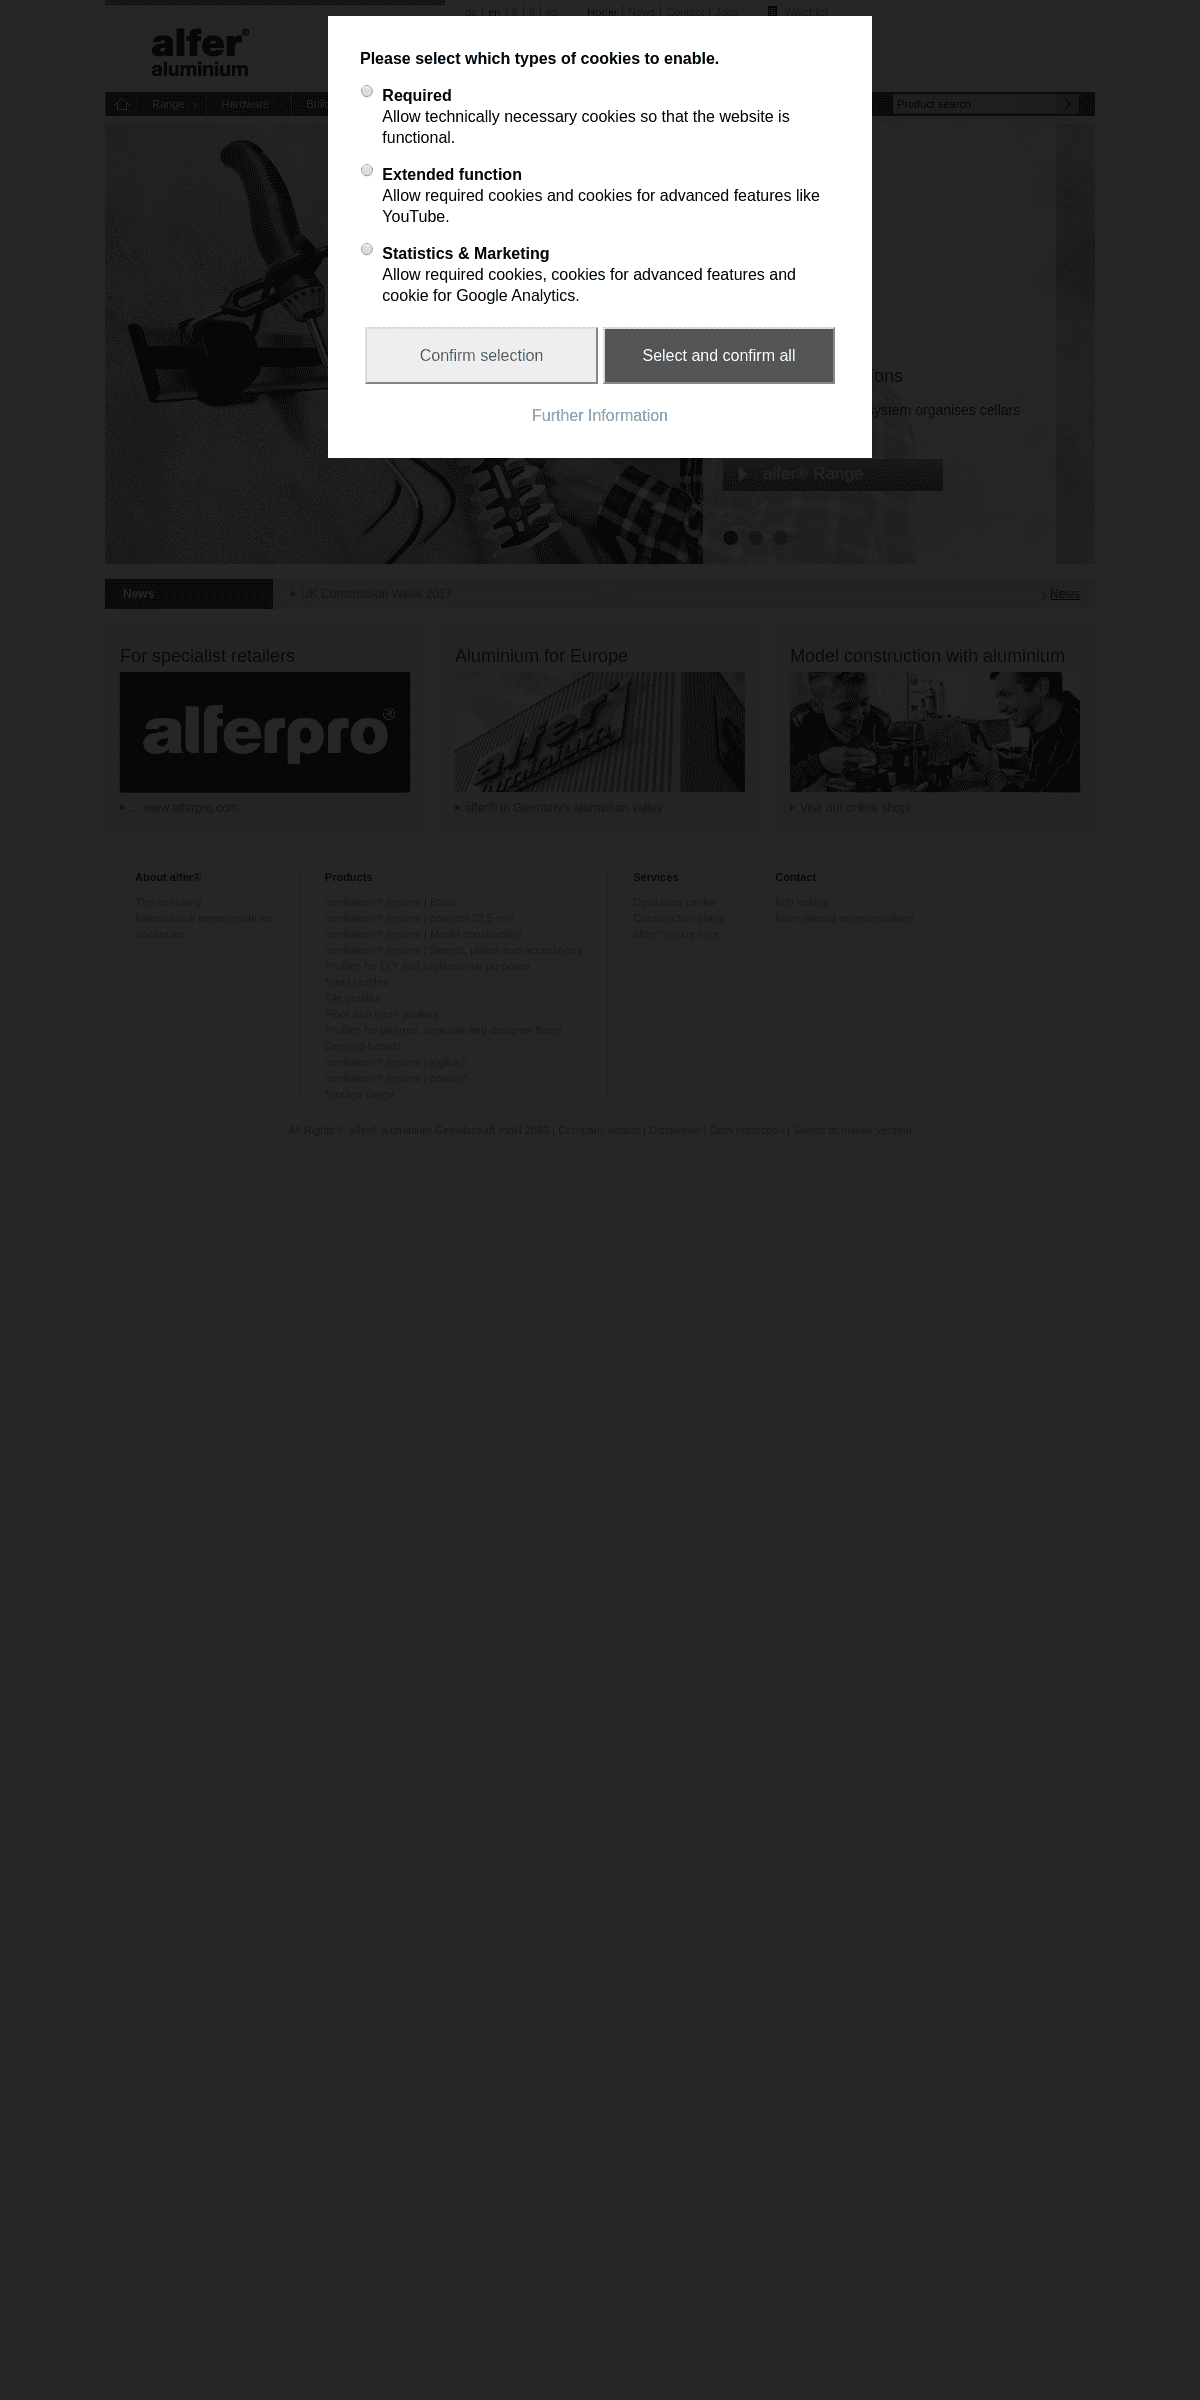 A complete backup of alfer.com